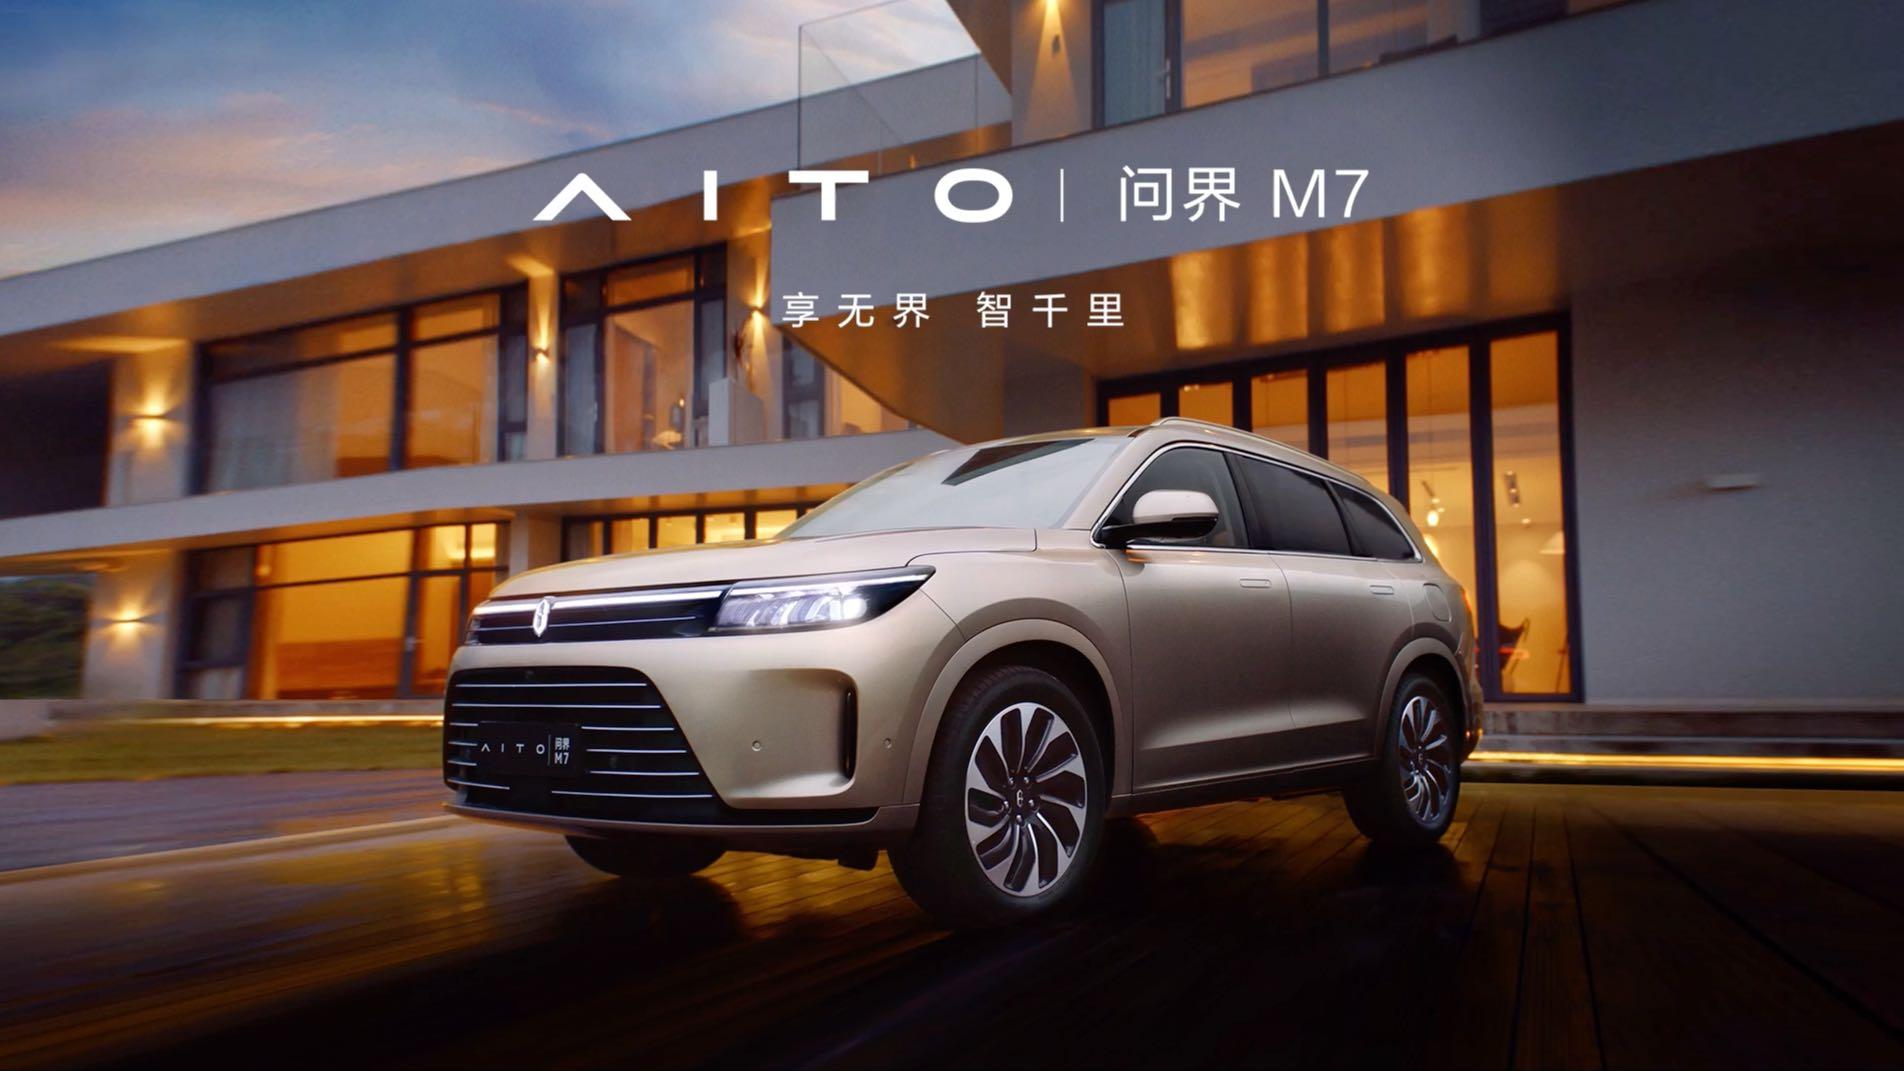 AITO品牌第二款车型问界M7发布 刷新6座大型SUV豪华新高度__凤凰网